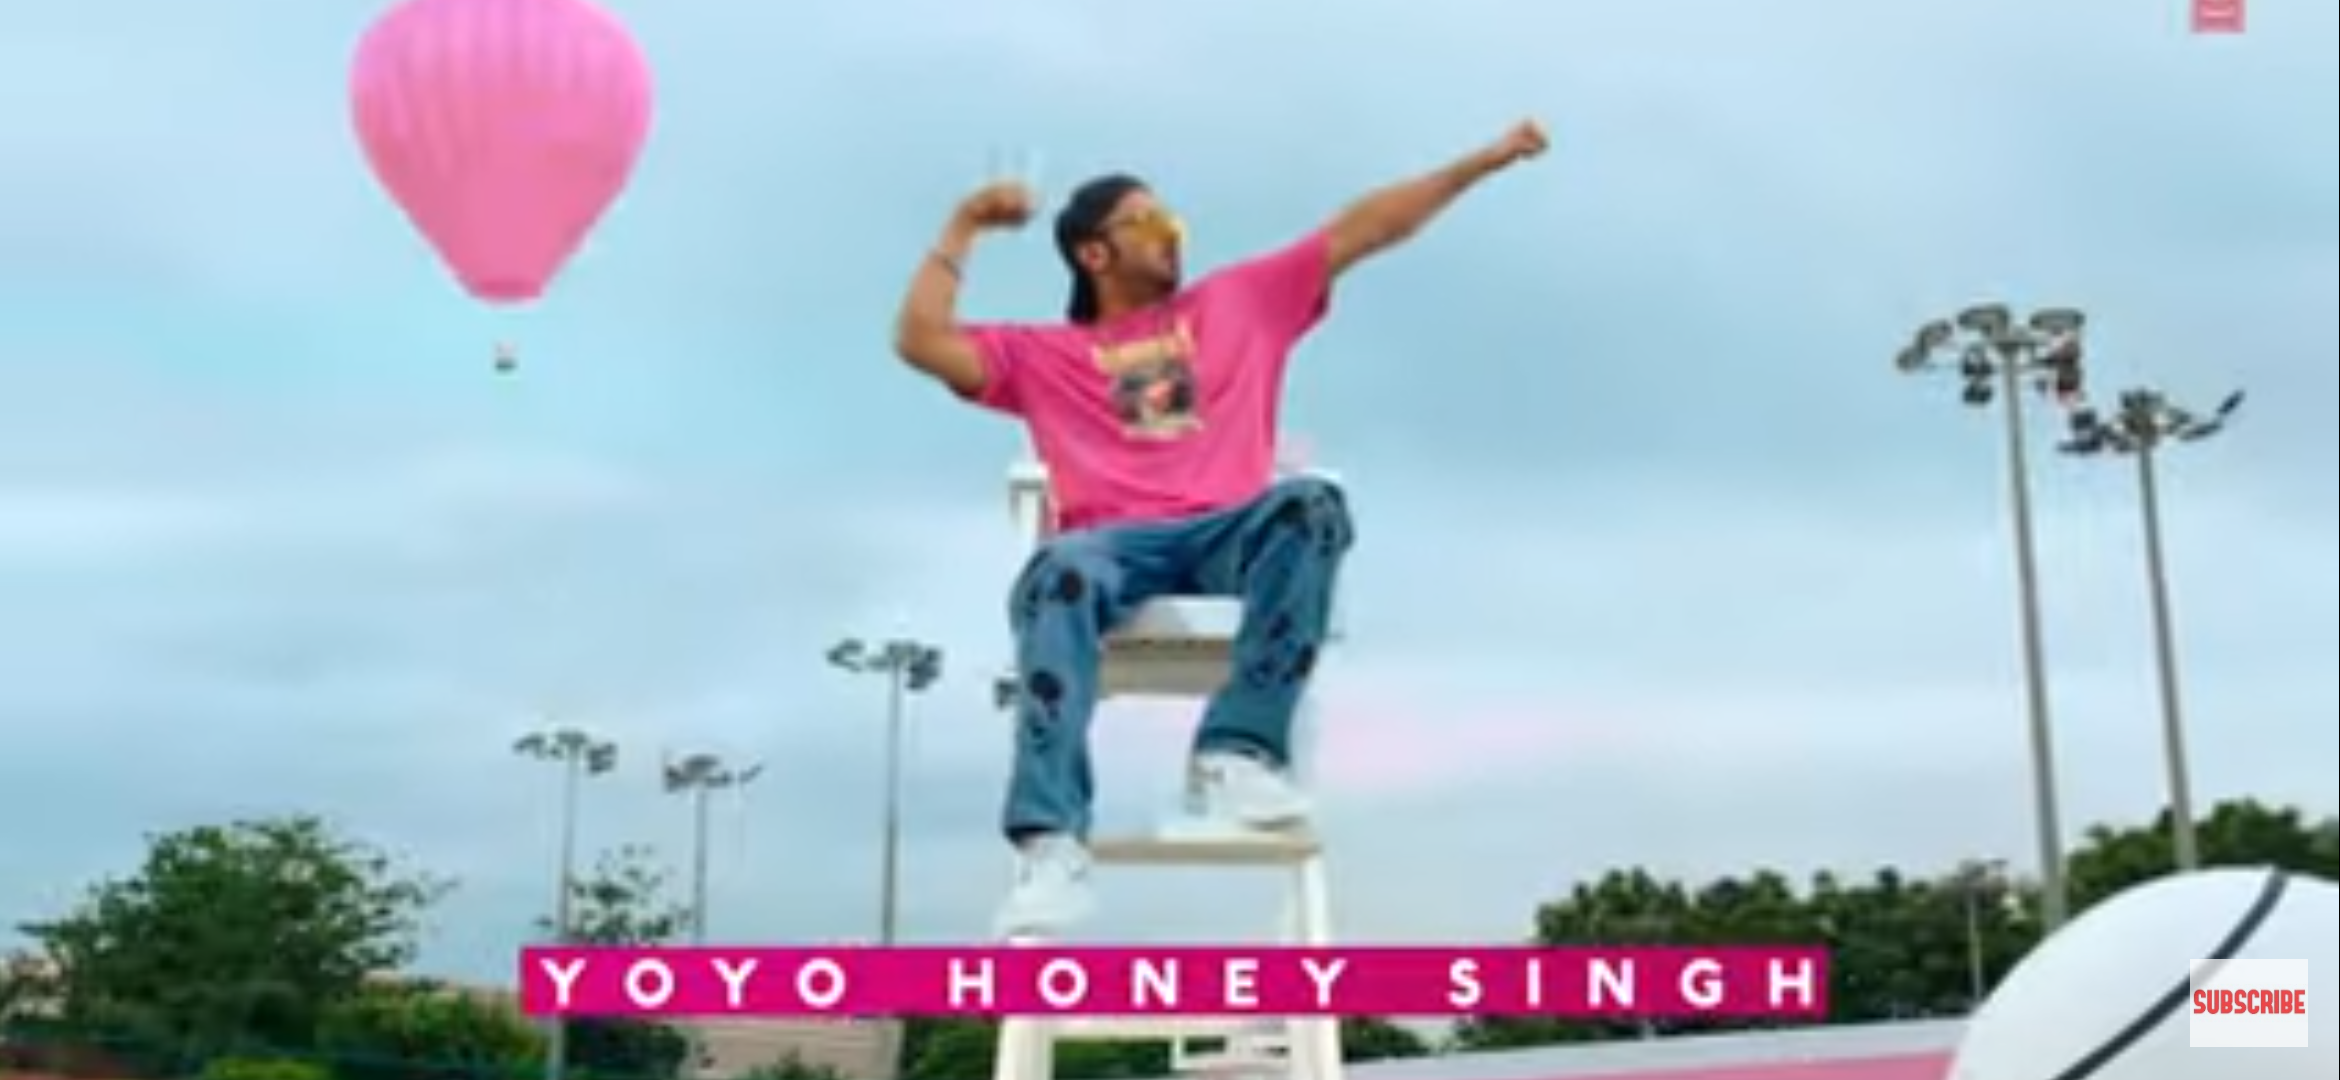 First Kiss: A Video Song By Yo Yo Honey Singh is Making all the Buzz! Heard it Yet?